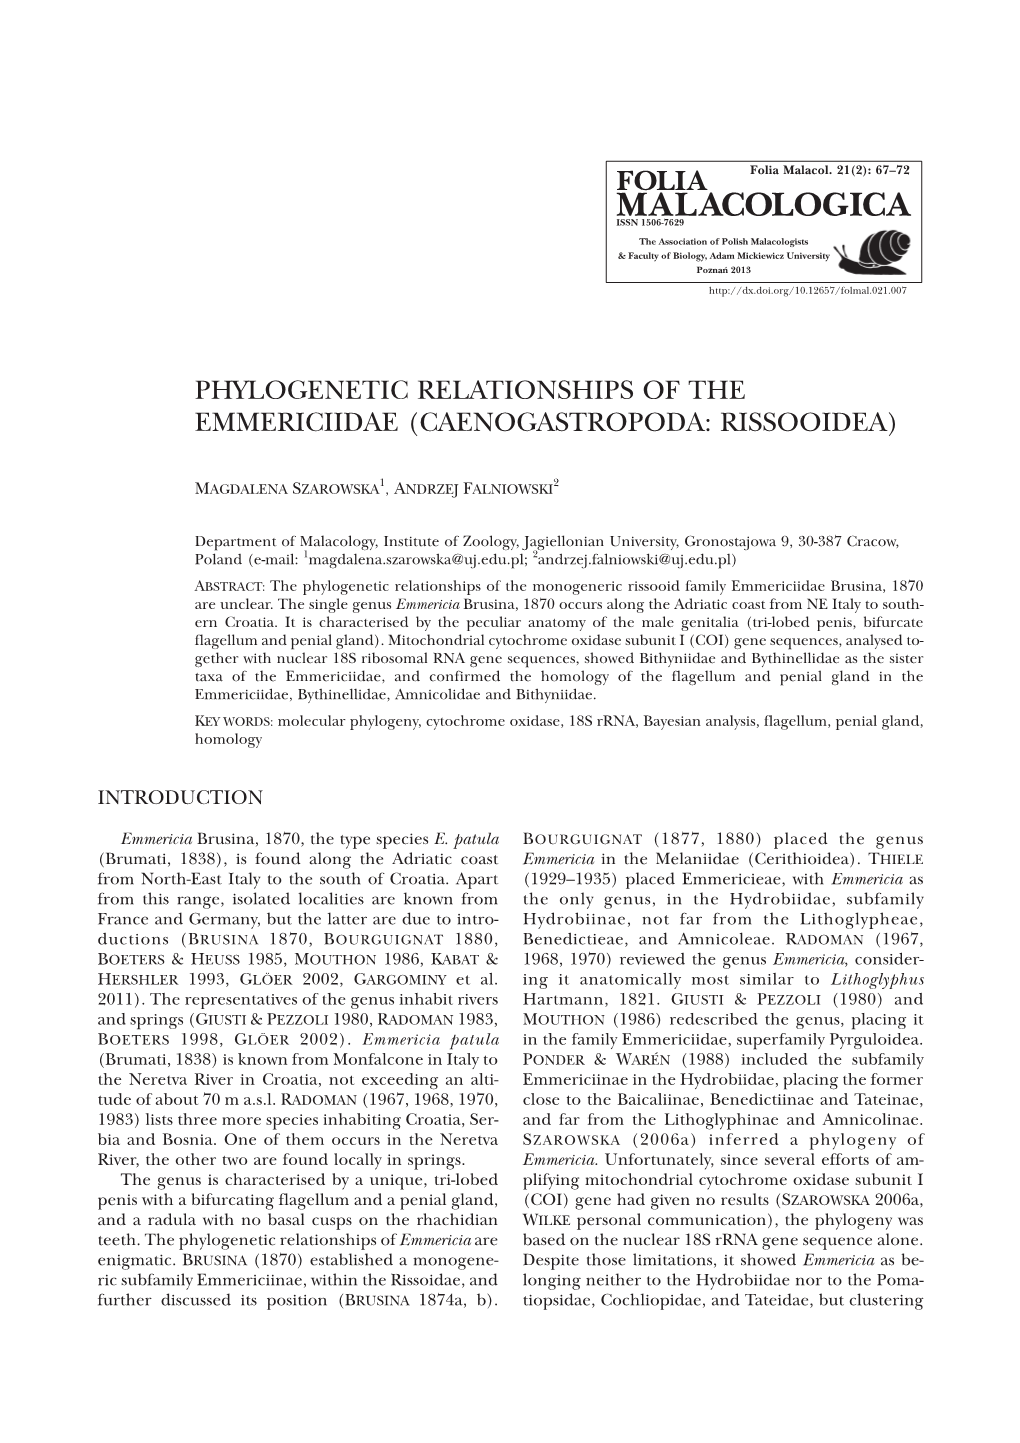 Phylogenetic Relationships of the Emmericiidae (Caenogastropoda: Rissooidea)